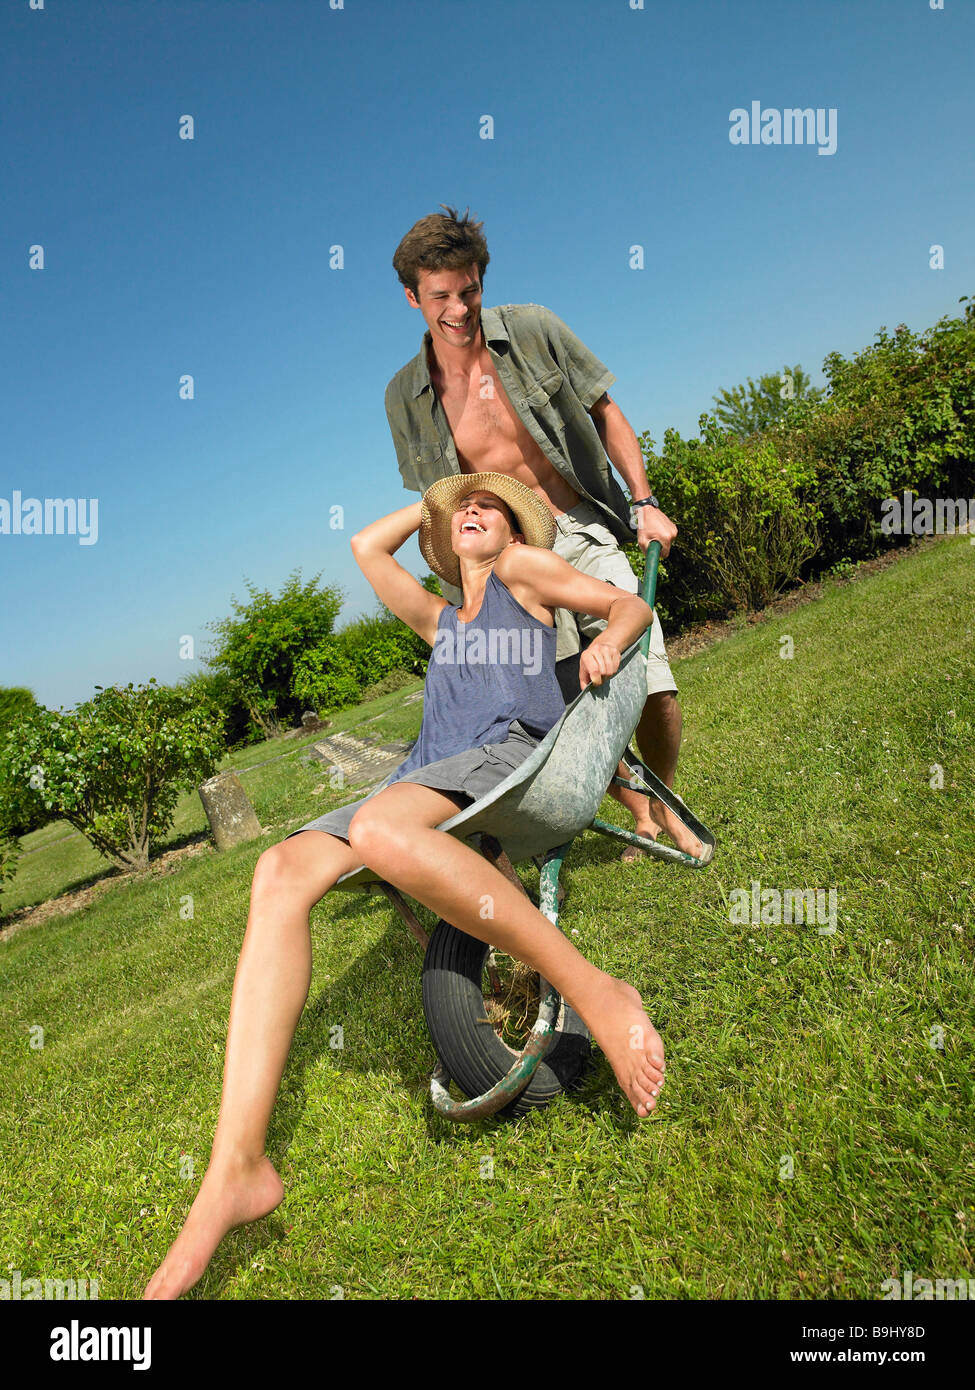 Man pushing woman in a wheelbarrow Stock Photo